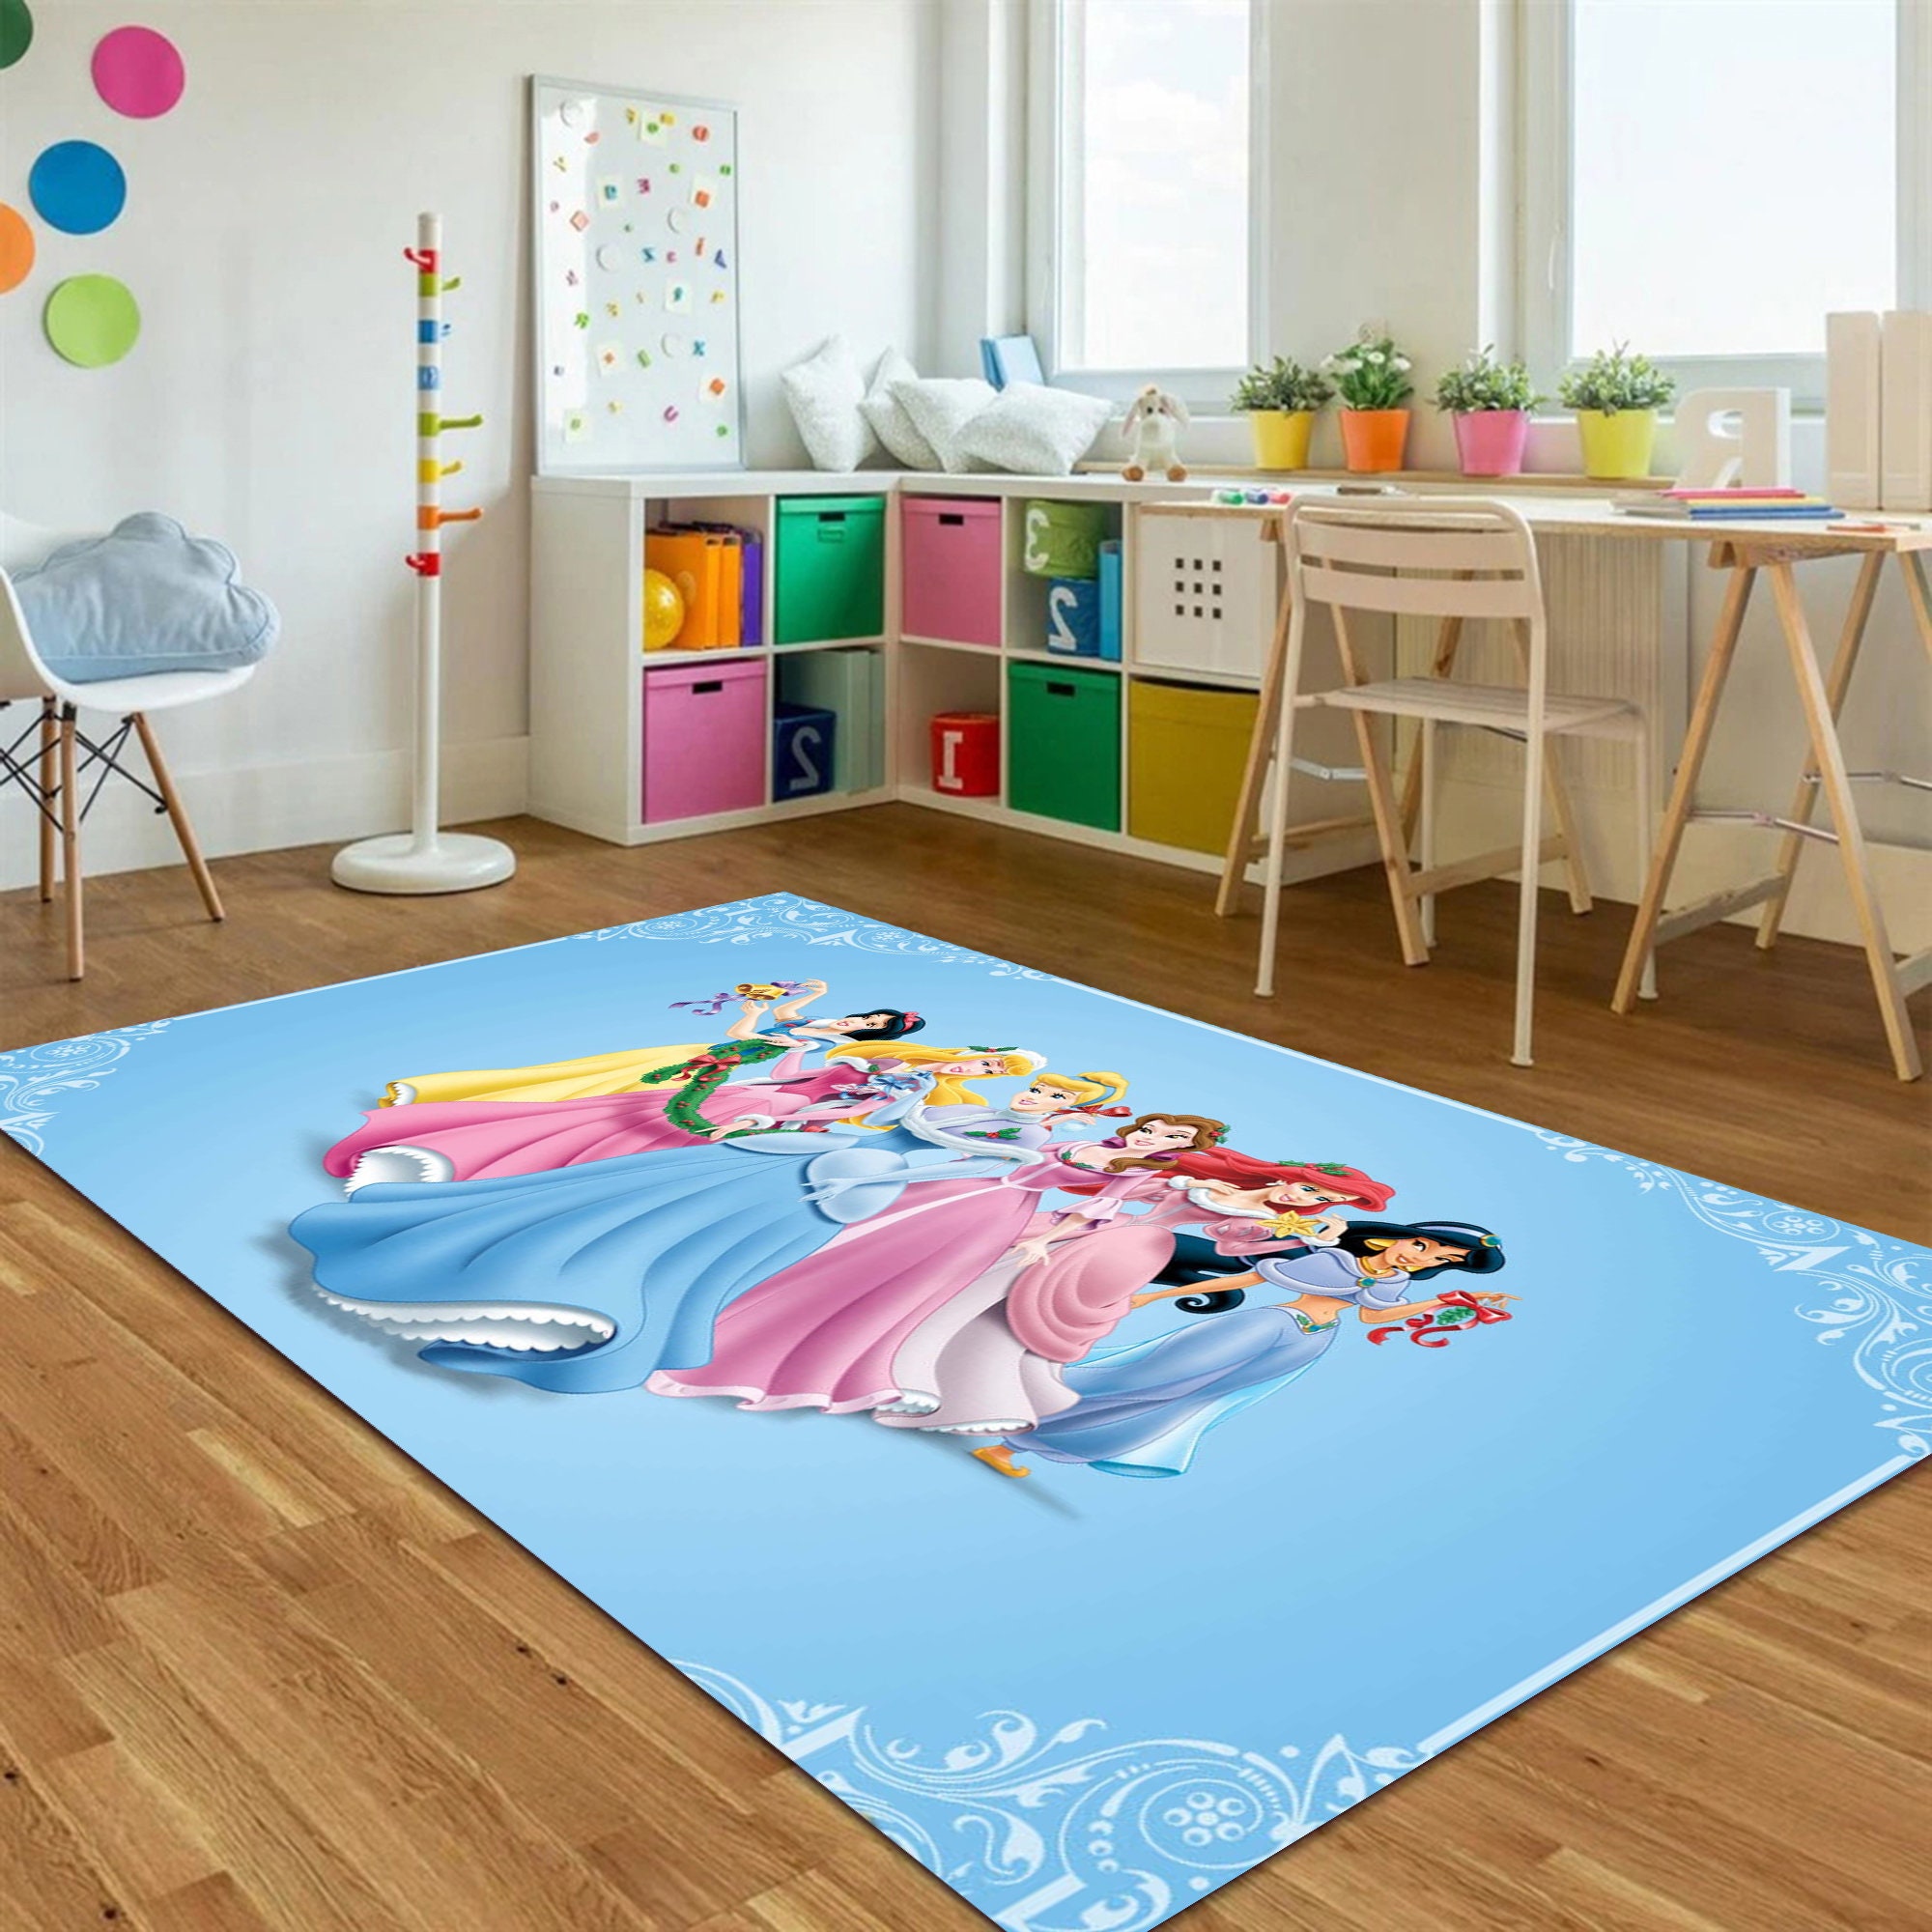 Discover Princess Rug, Kids Room Rug, Rapunzel Rug, Snow Blue, Ariel Rug, Fa Mulan Rug, Girl Room Rug, Cute Rug, Nursery Rug, Kids Room Decor